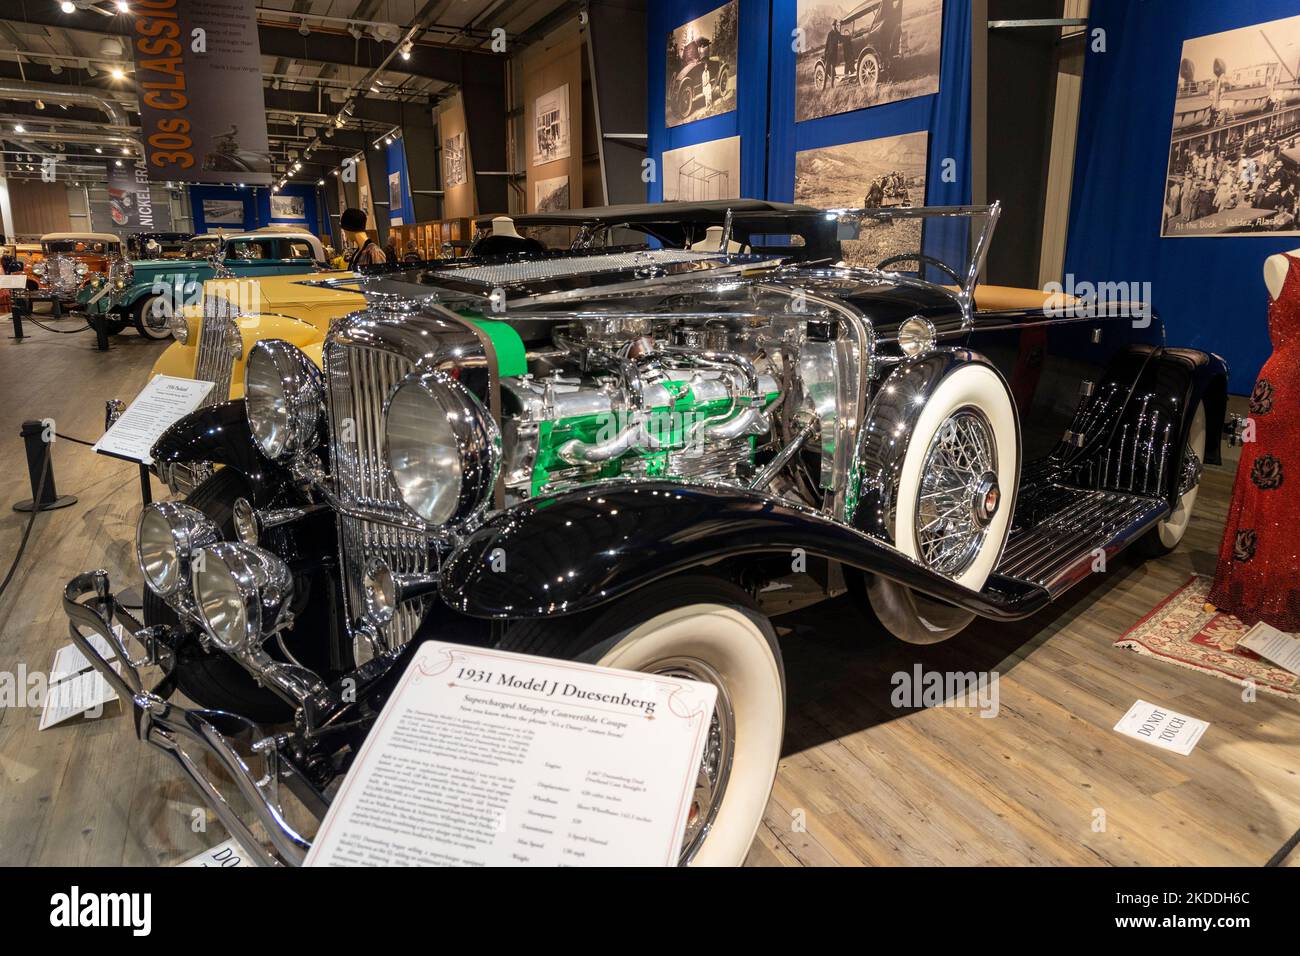 1931 Model J Dusenberg, Fountainhead Antique Auto Museum, Fairbanks, Alaska Stock Photo